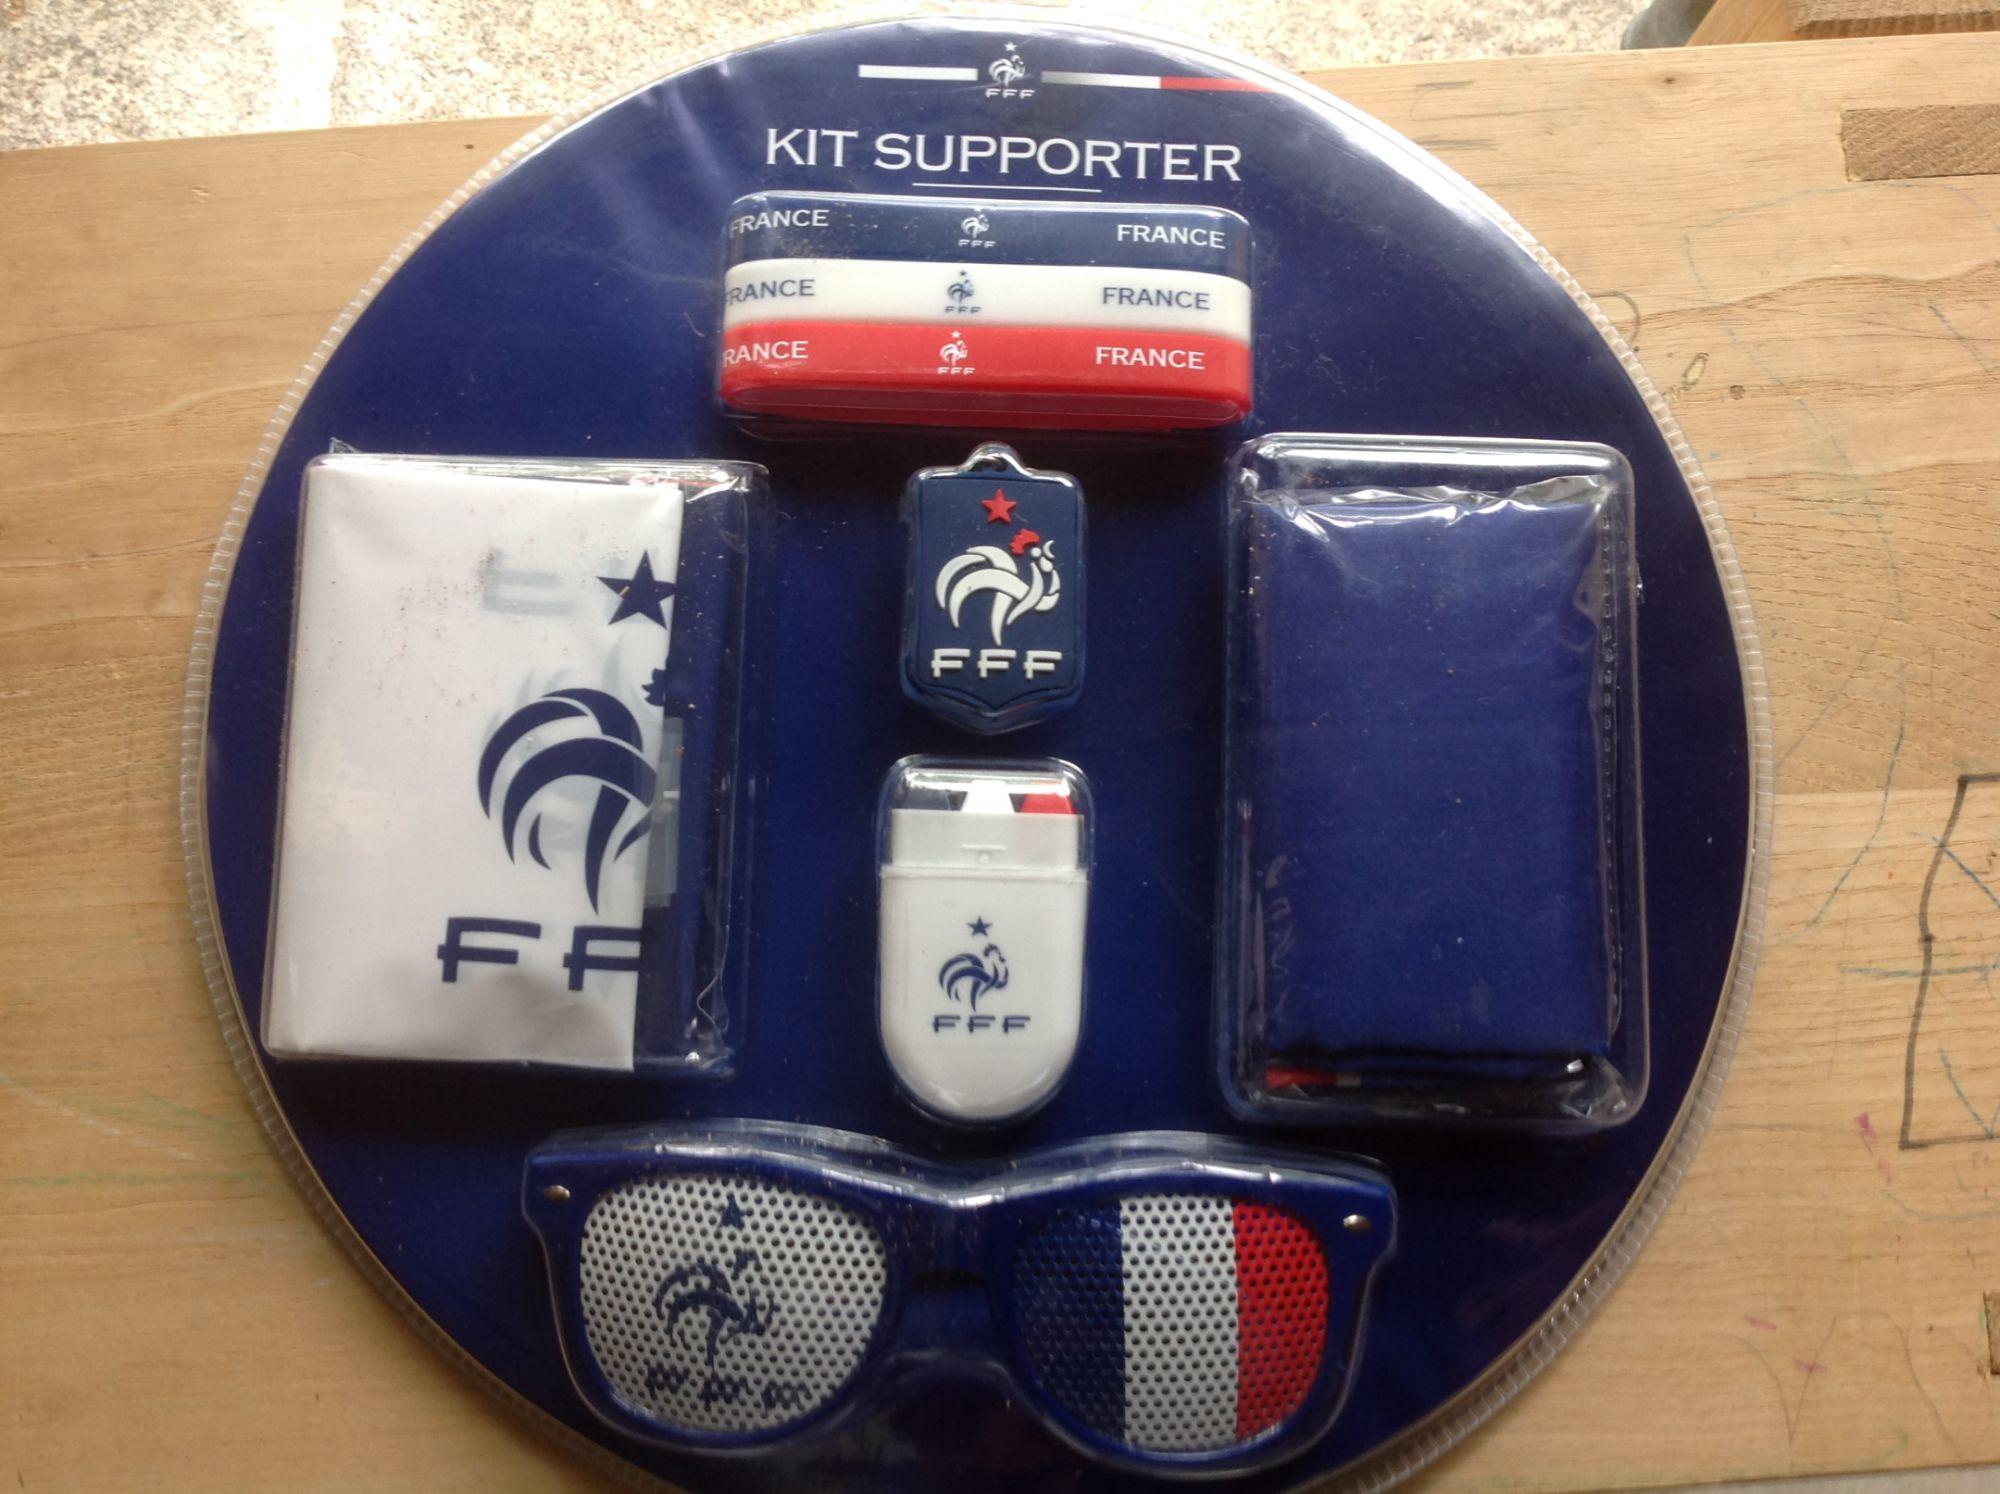 Kit supporter France FFF™ : Deguise-toi, achat de